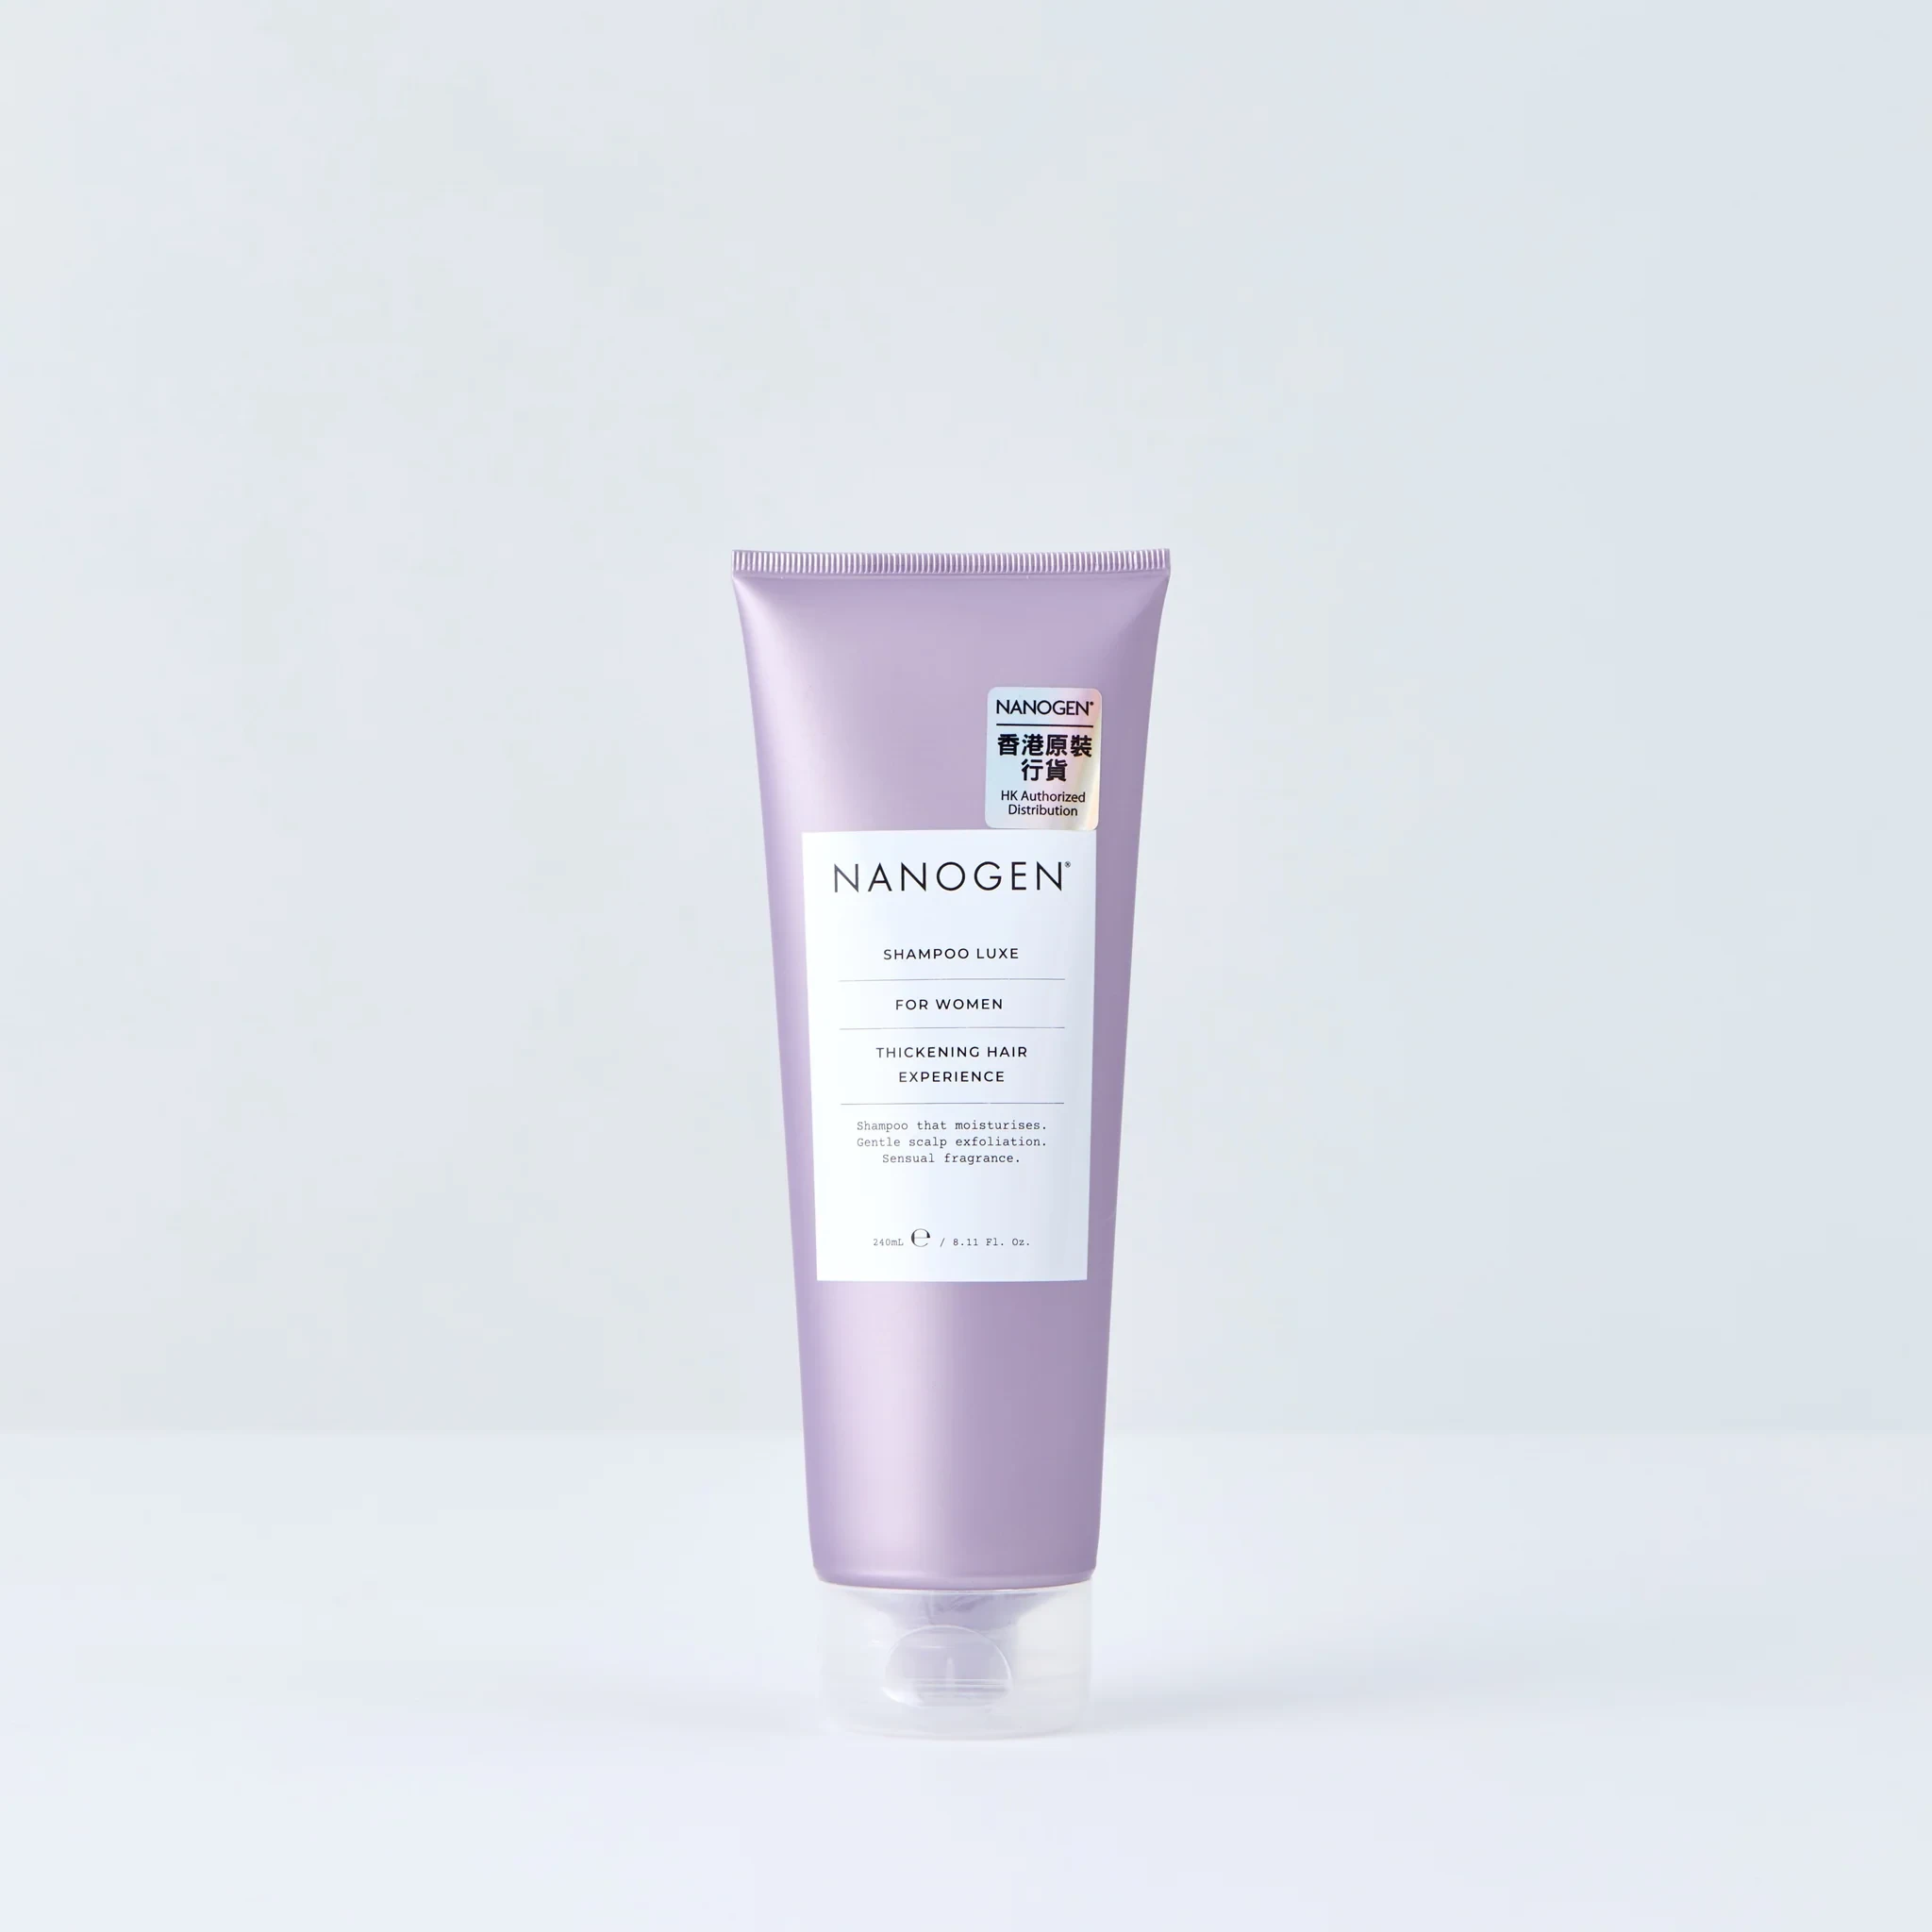 Nanogen Shampoo Luxe For Women Thickening Hair Experience 女士LUXE頭髮生長因子洗頭水 (7-IN-1多功能) $159